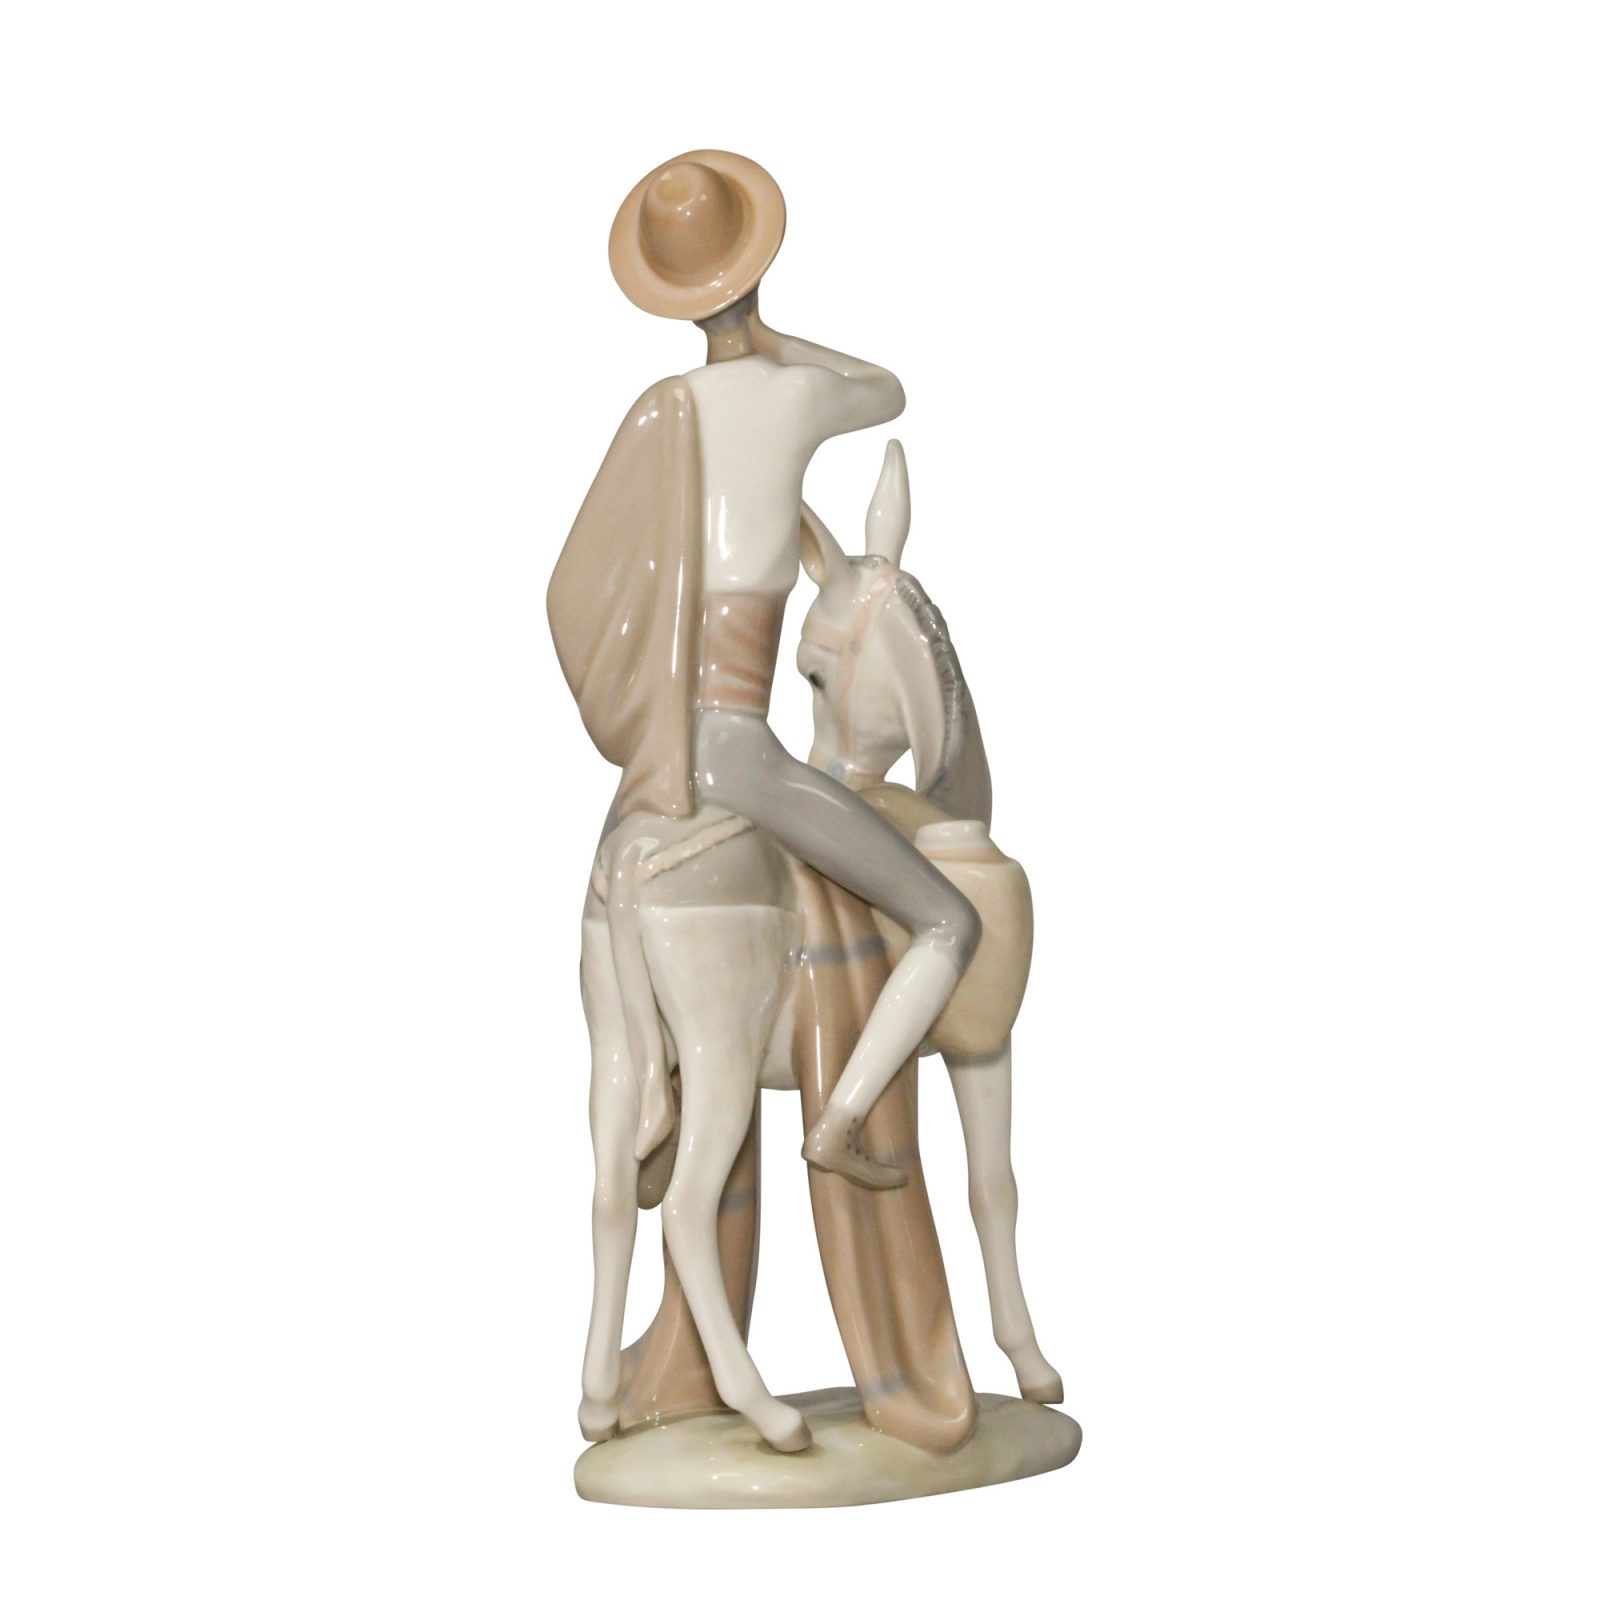 Honey Peddler 4638 - Lladro Figurine